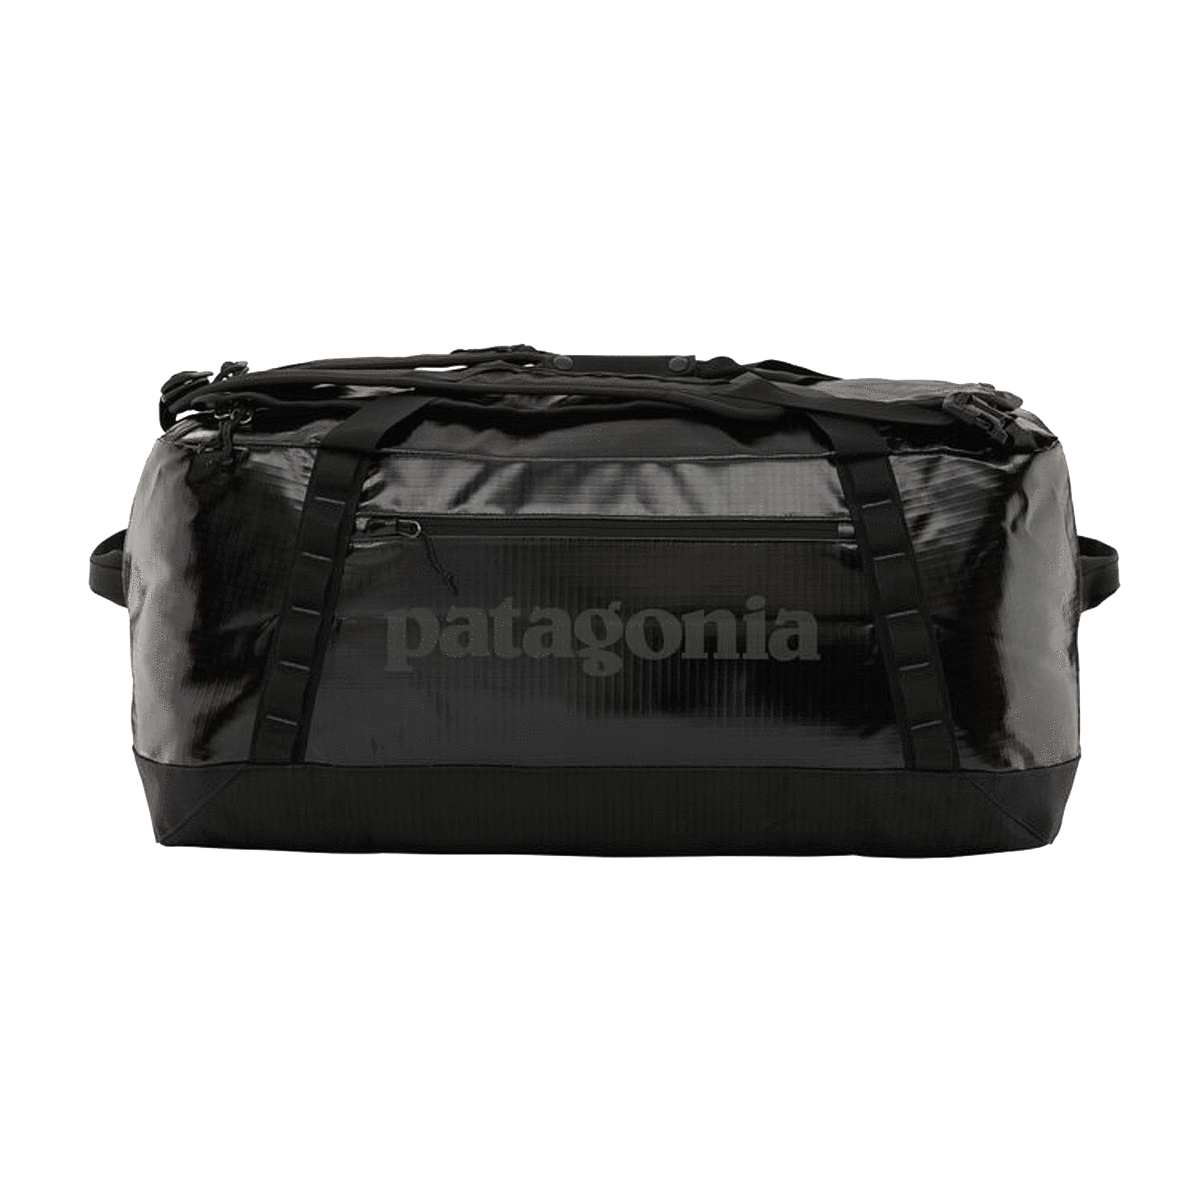 Black Custom Patagonia Black Hole Duffel Bag 70L